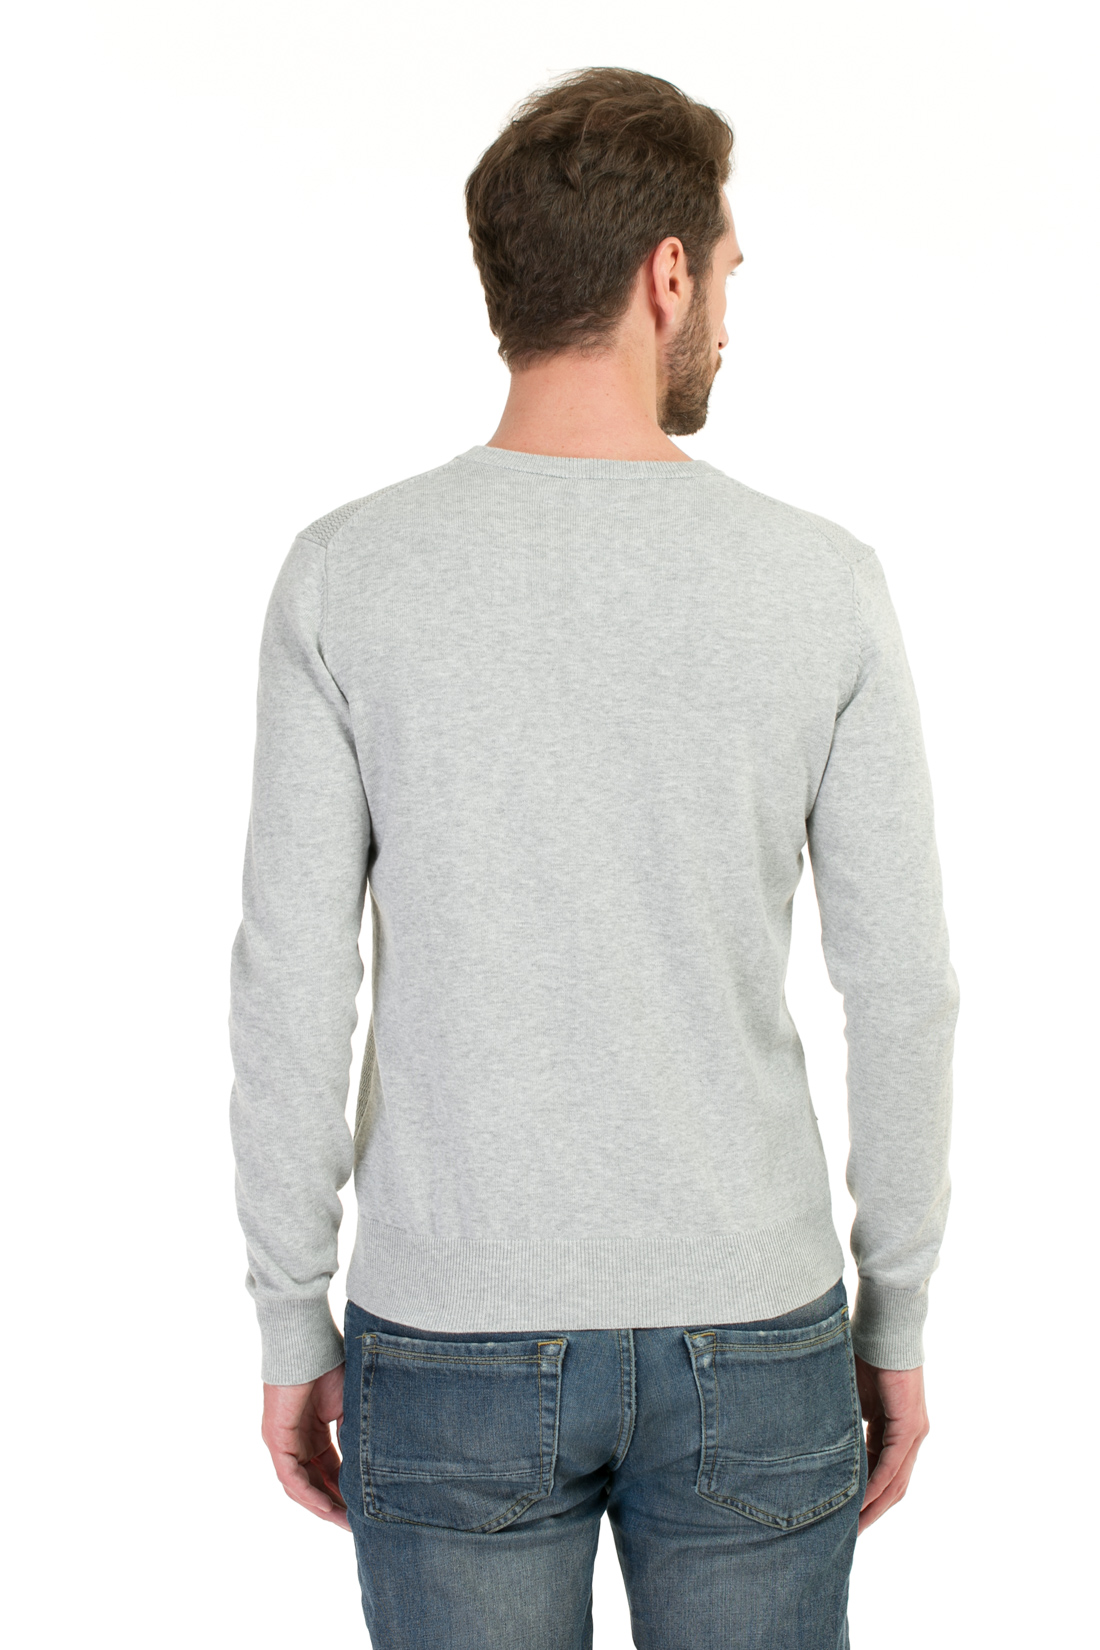 Пуловер с рельефным узором (арт. baon B637016), размер XXL, цвет silver melange#серый Пуловер с рельефным узором (арт. baon B637016) - фото 2